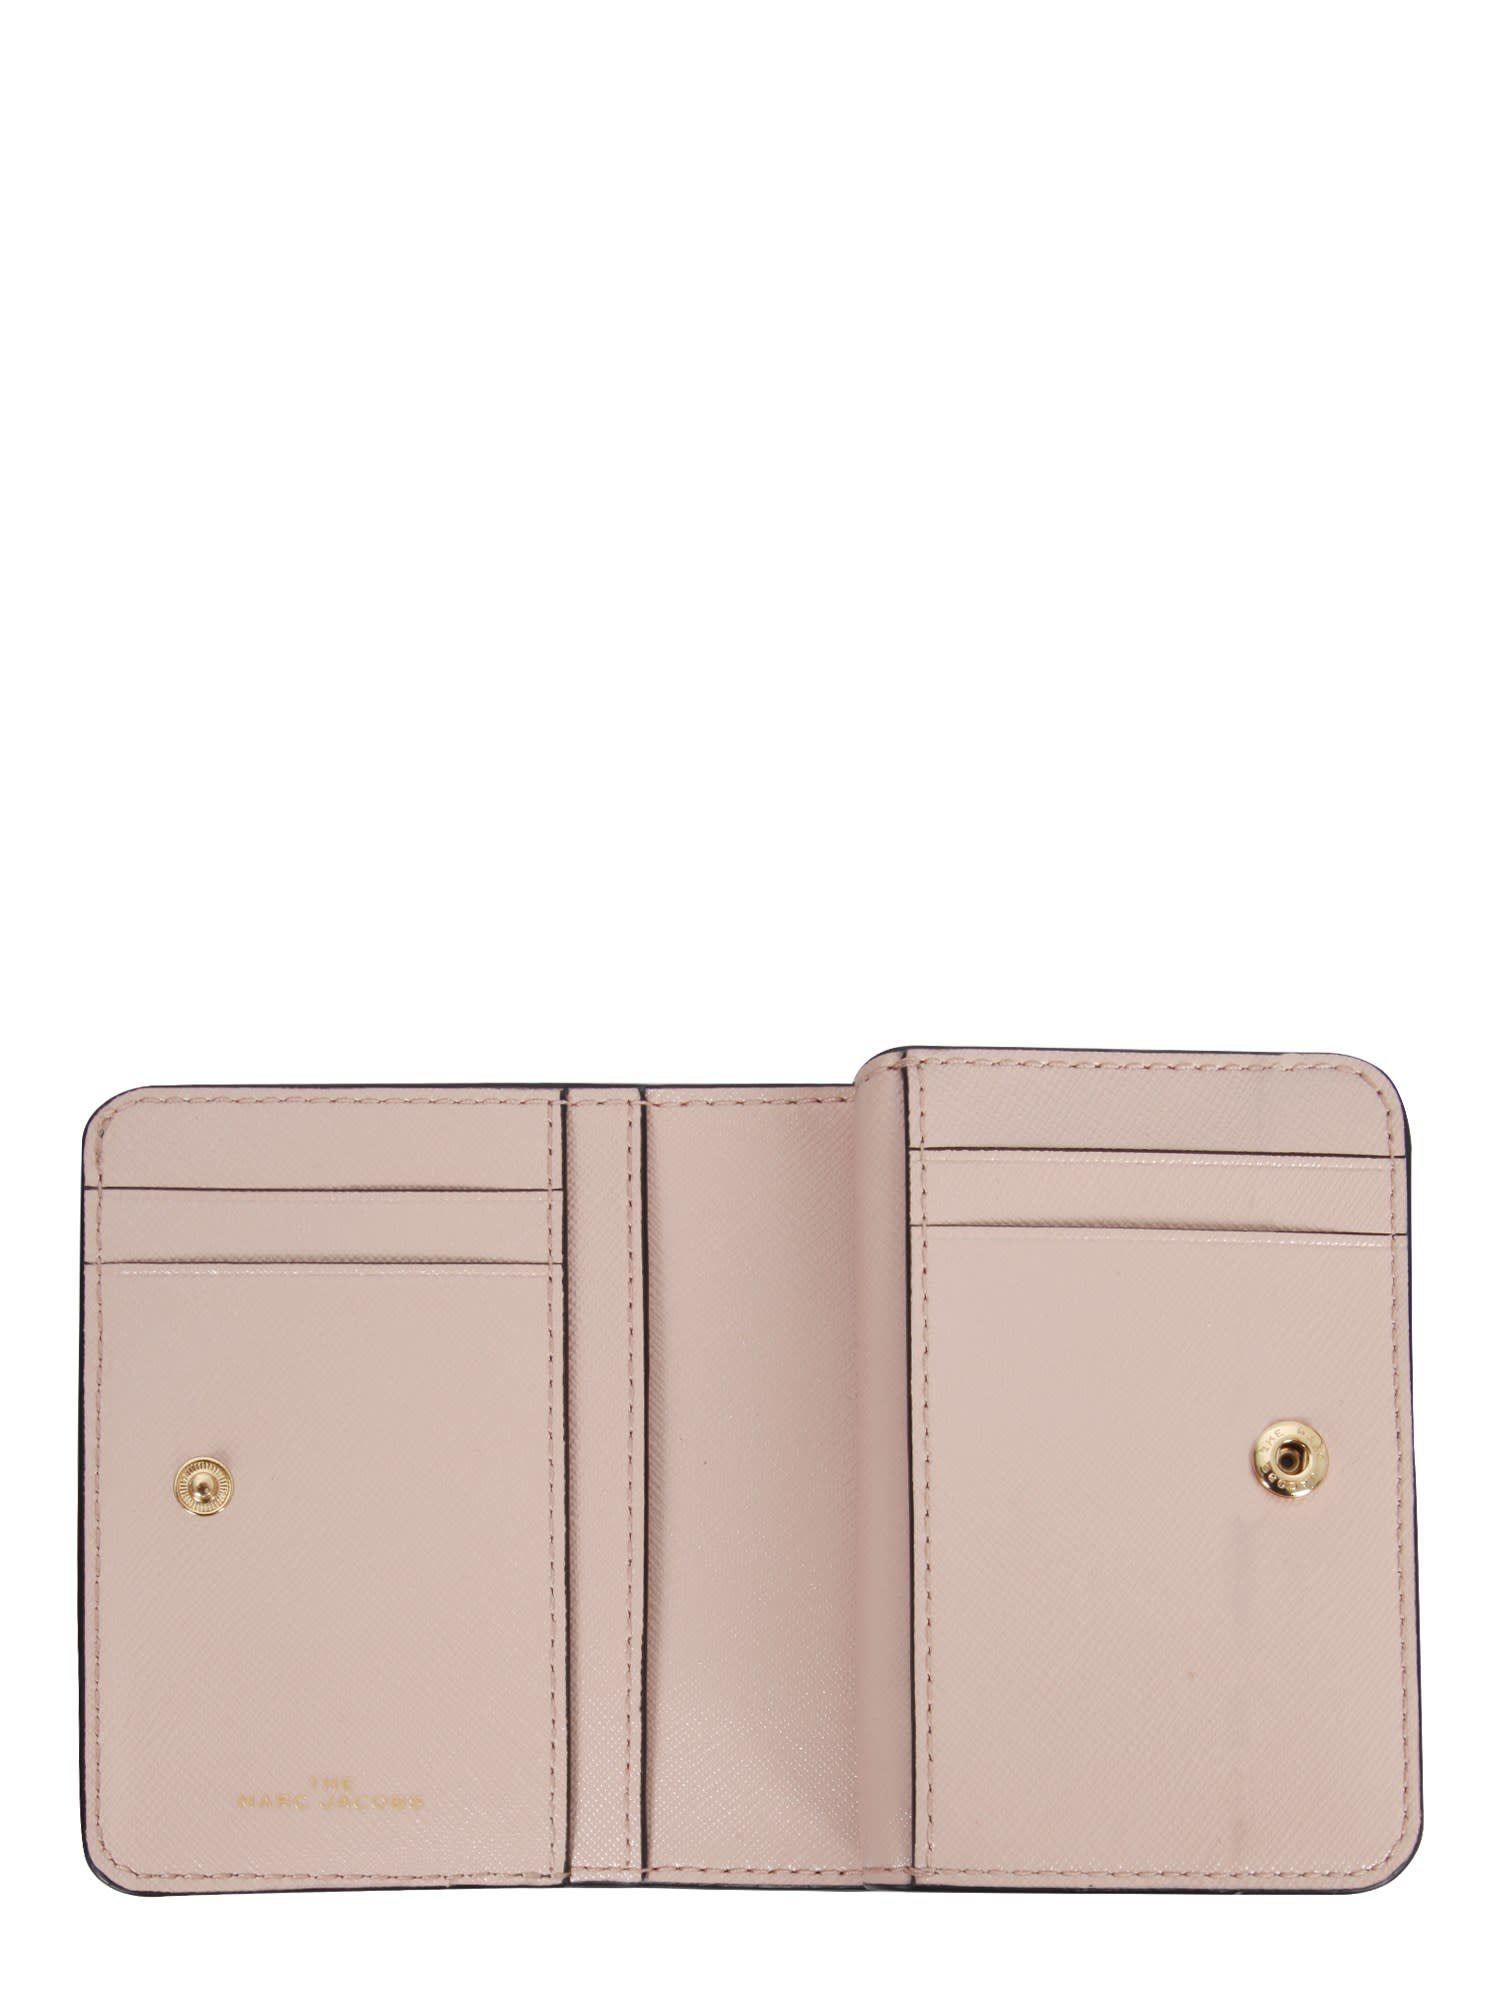 Marc Jacobs Mini Snapshot Wallet In Dust Multi | ModeSens